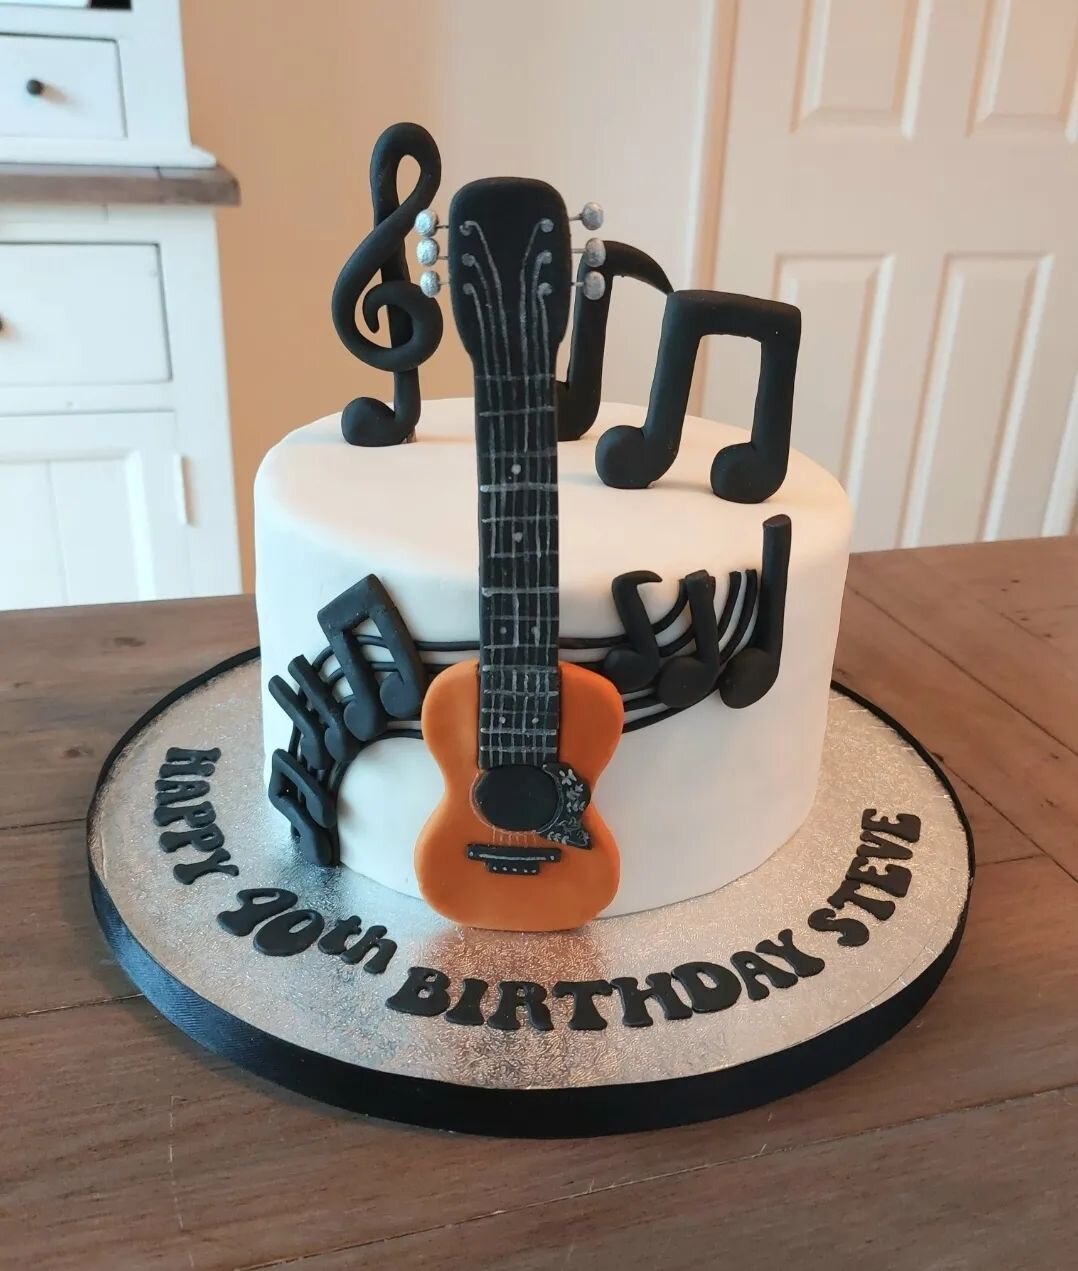 A Birthday cake that rocks music!! 🎵🎶🎸

#guitarcake #guitar #music #singer #musicnotes #acousticguitar #birthday #birthdaycake #noveltycake #musician #melody #lovinglife #birthdayboy #40thbirthday #40thbirthdaycake #lifebeginsat40 #partytime #cele